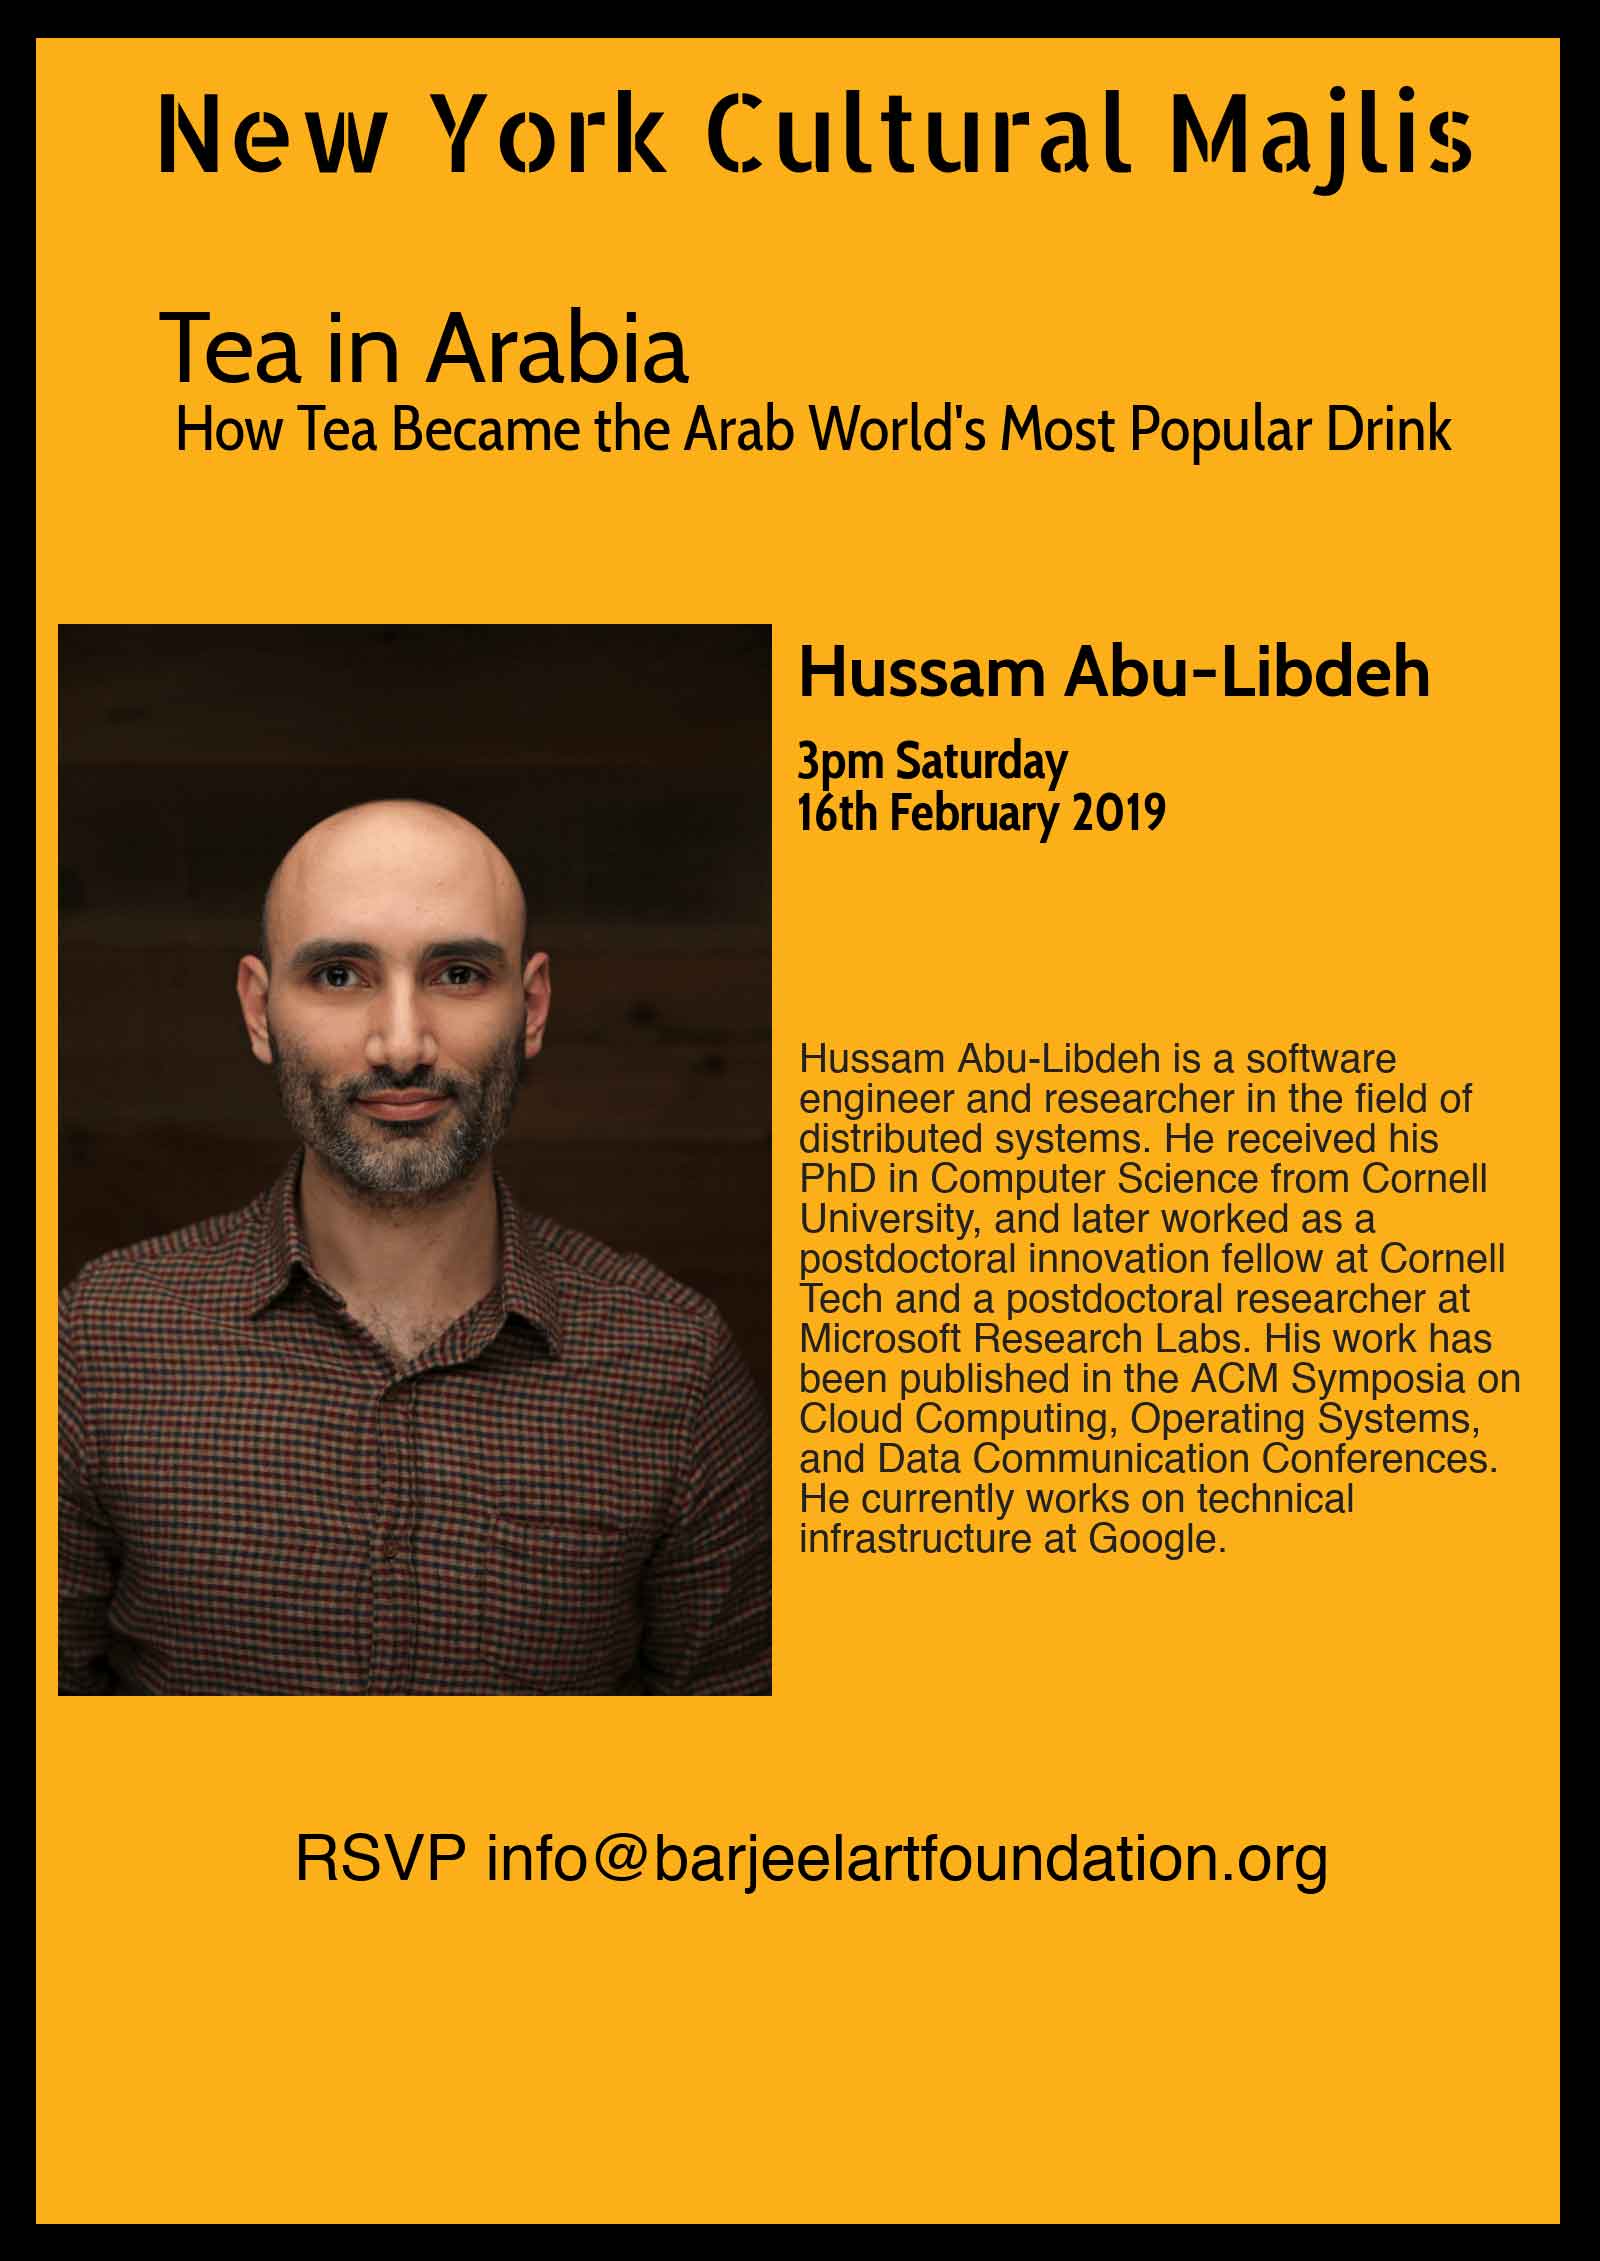 NYC Cultural Majlis: Hussam Abu-Libdeh — Tea in Arabia